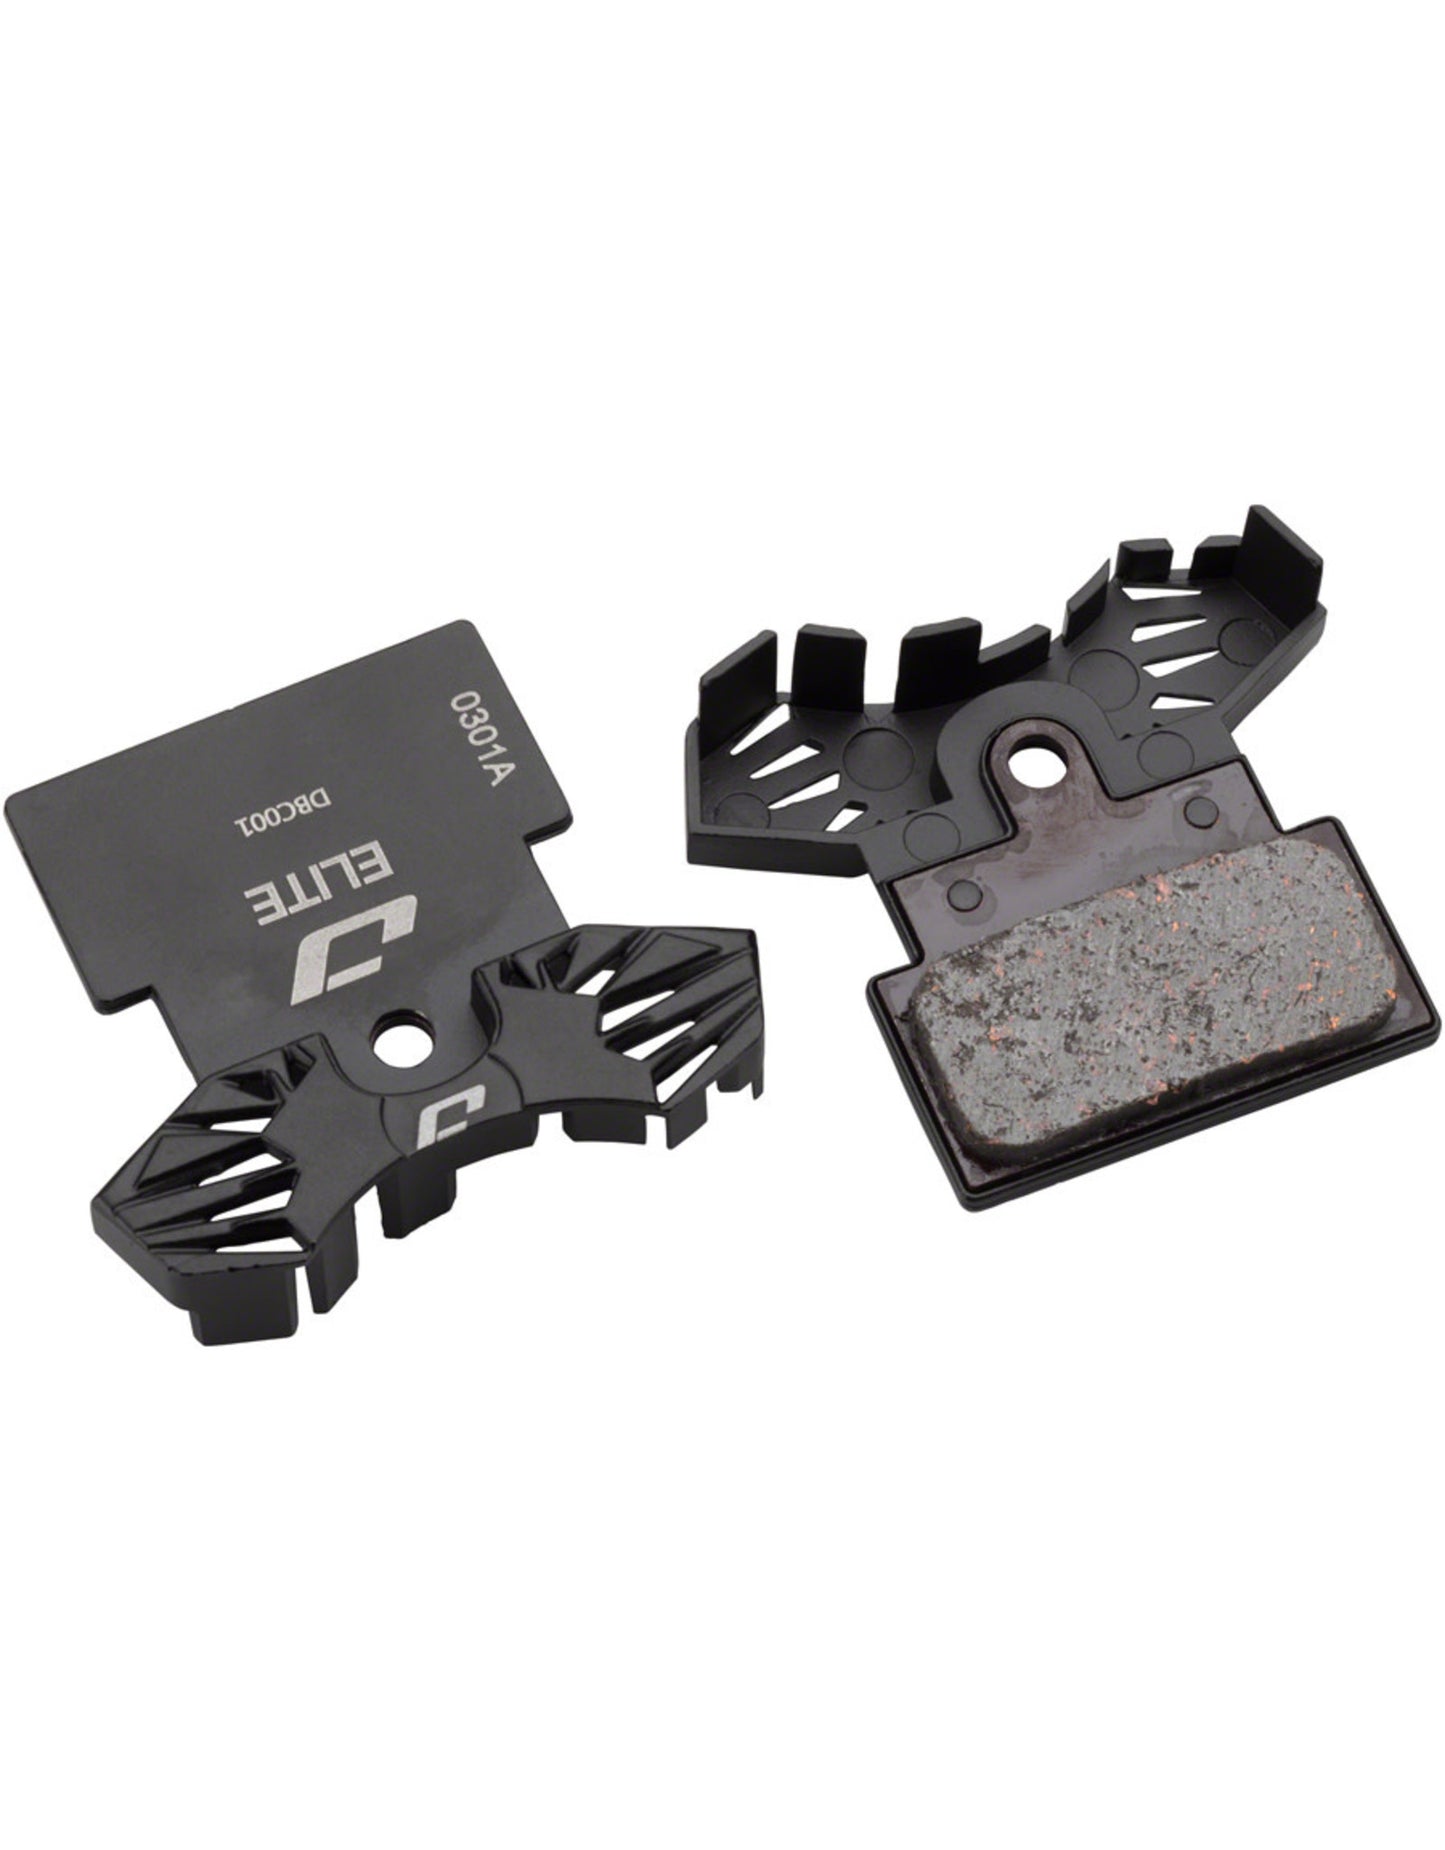 Jagwire Elite Cooling Disc Brake Pad fits Shimano M9000 M9020 M985 M8000 M785 M7000 M666 M675 M615 S700 R785 RS785